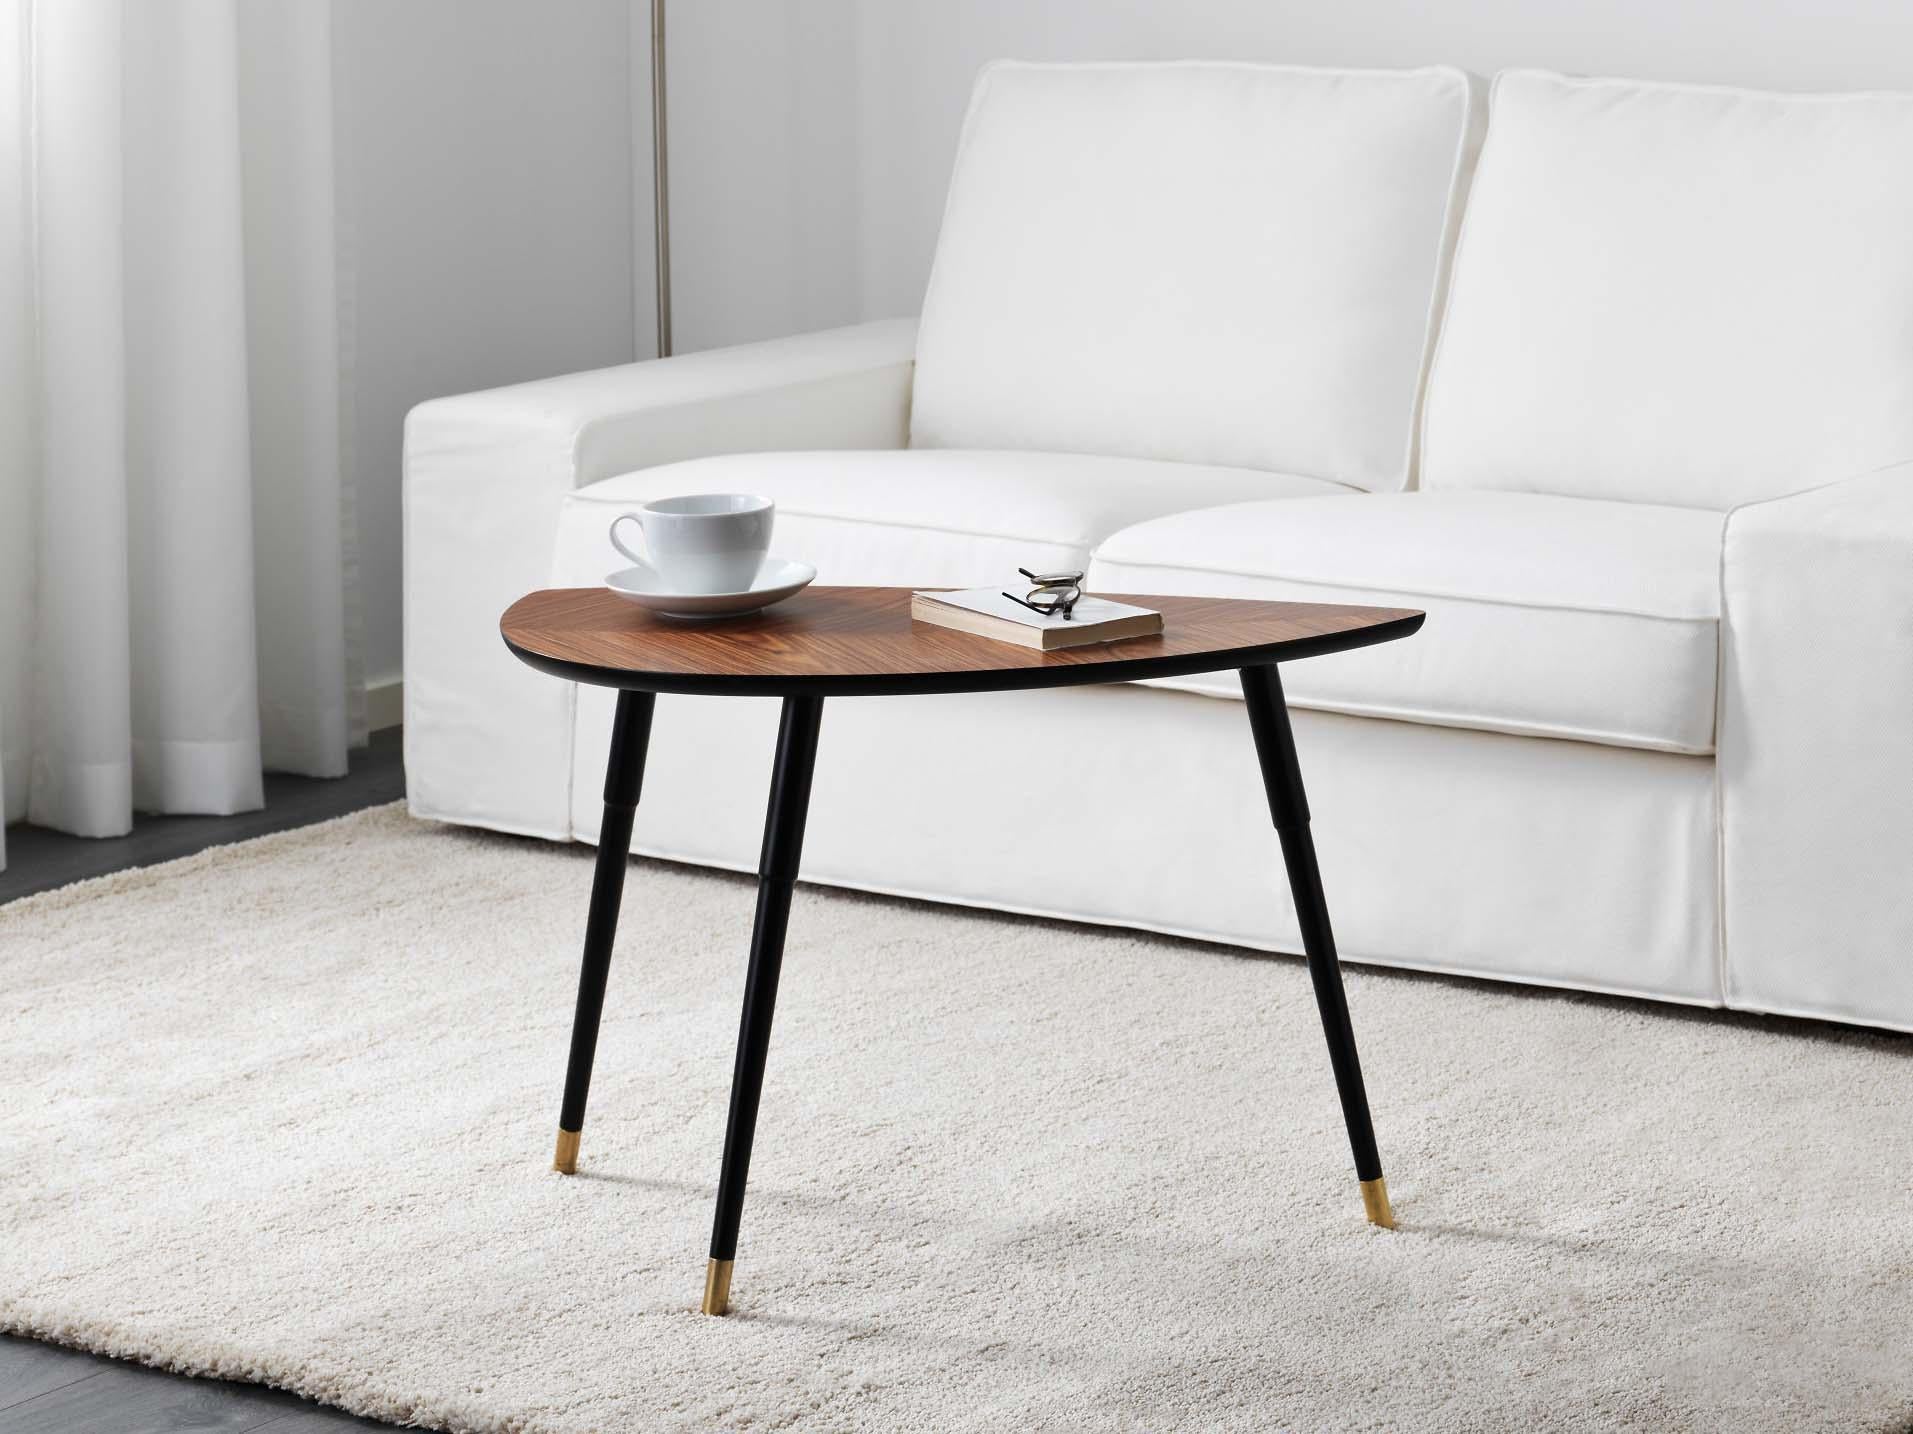 Lövbacken Side Table, £45, Ikea.com